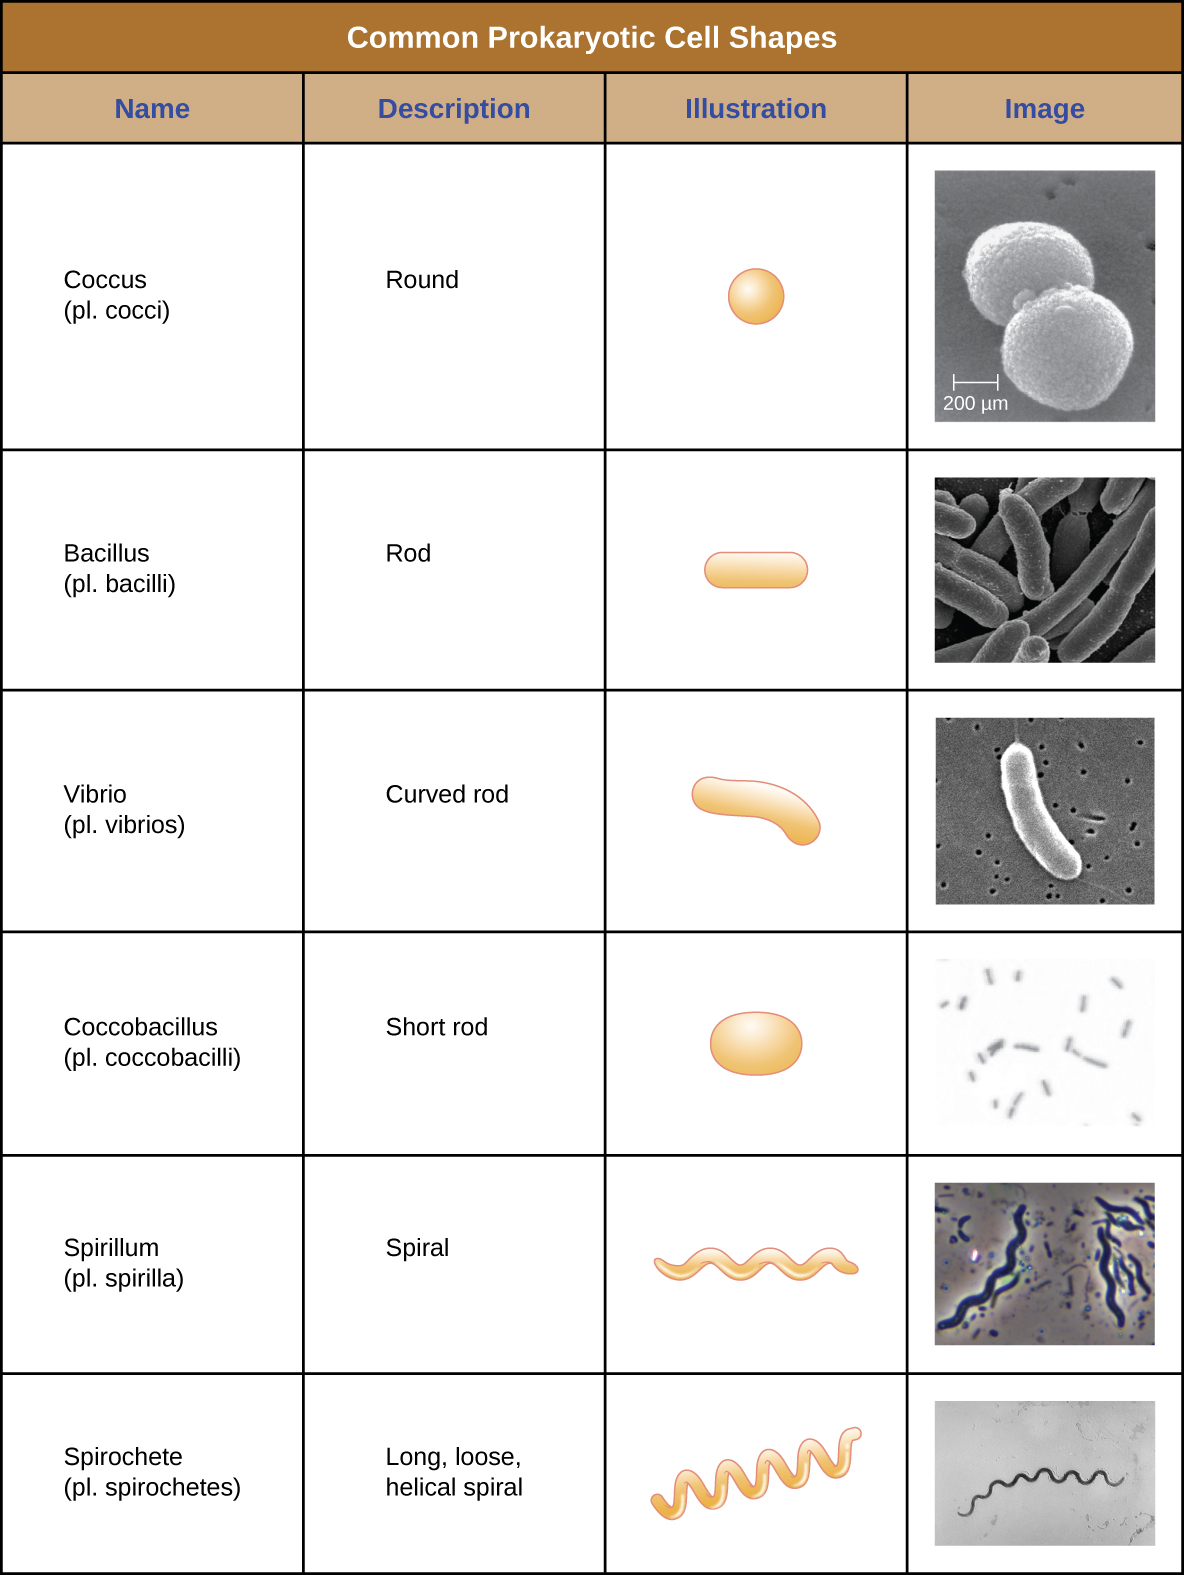 Common Prokaryotic Cell Shapes.